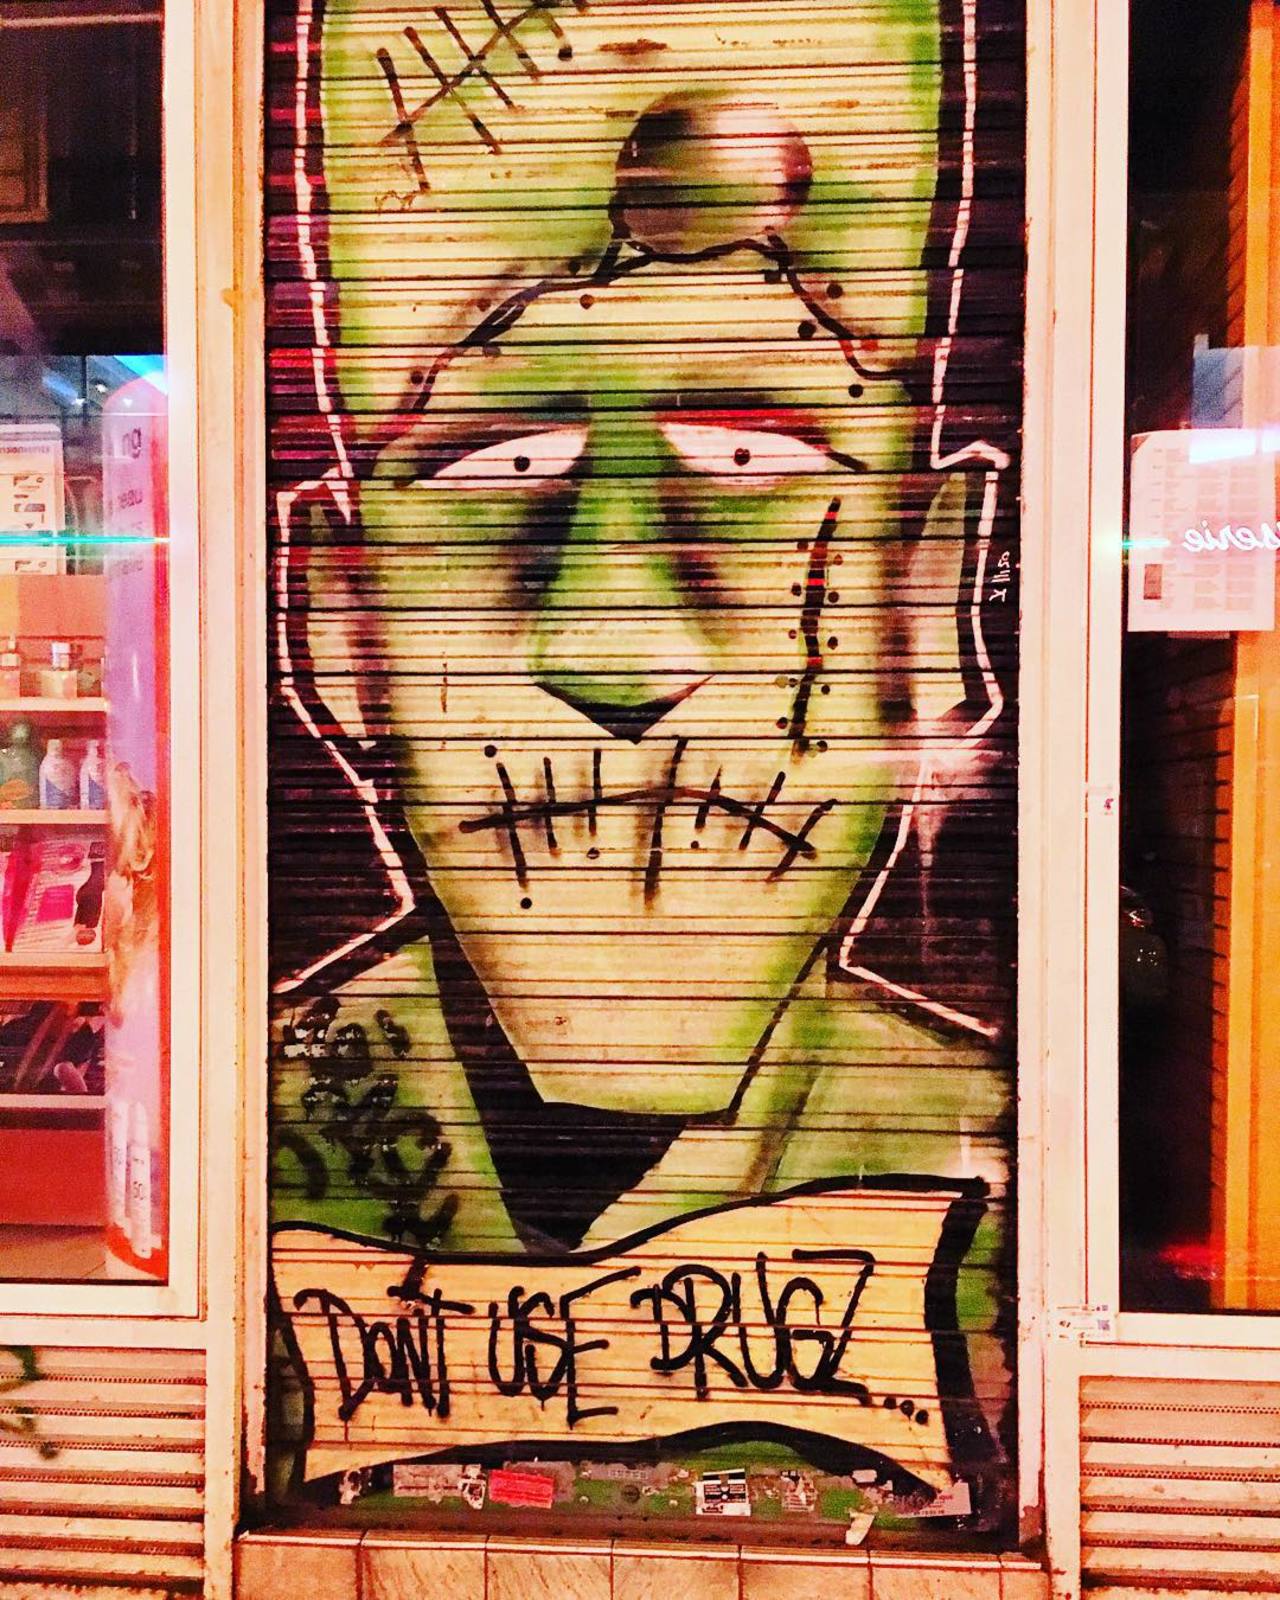 #Paris #graffiti photo by @tips.paris http://ift.tt/1MTMl7c #StreetArt https://t.co/ojqWPstZzN